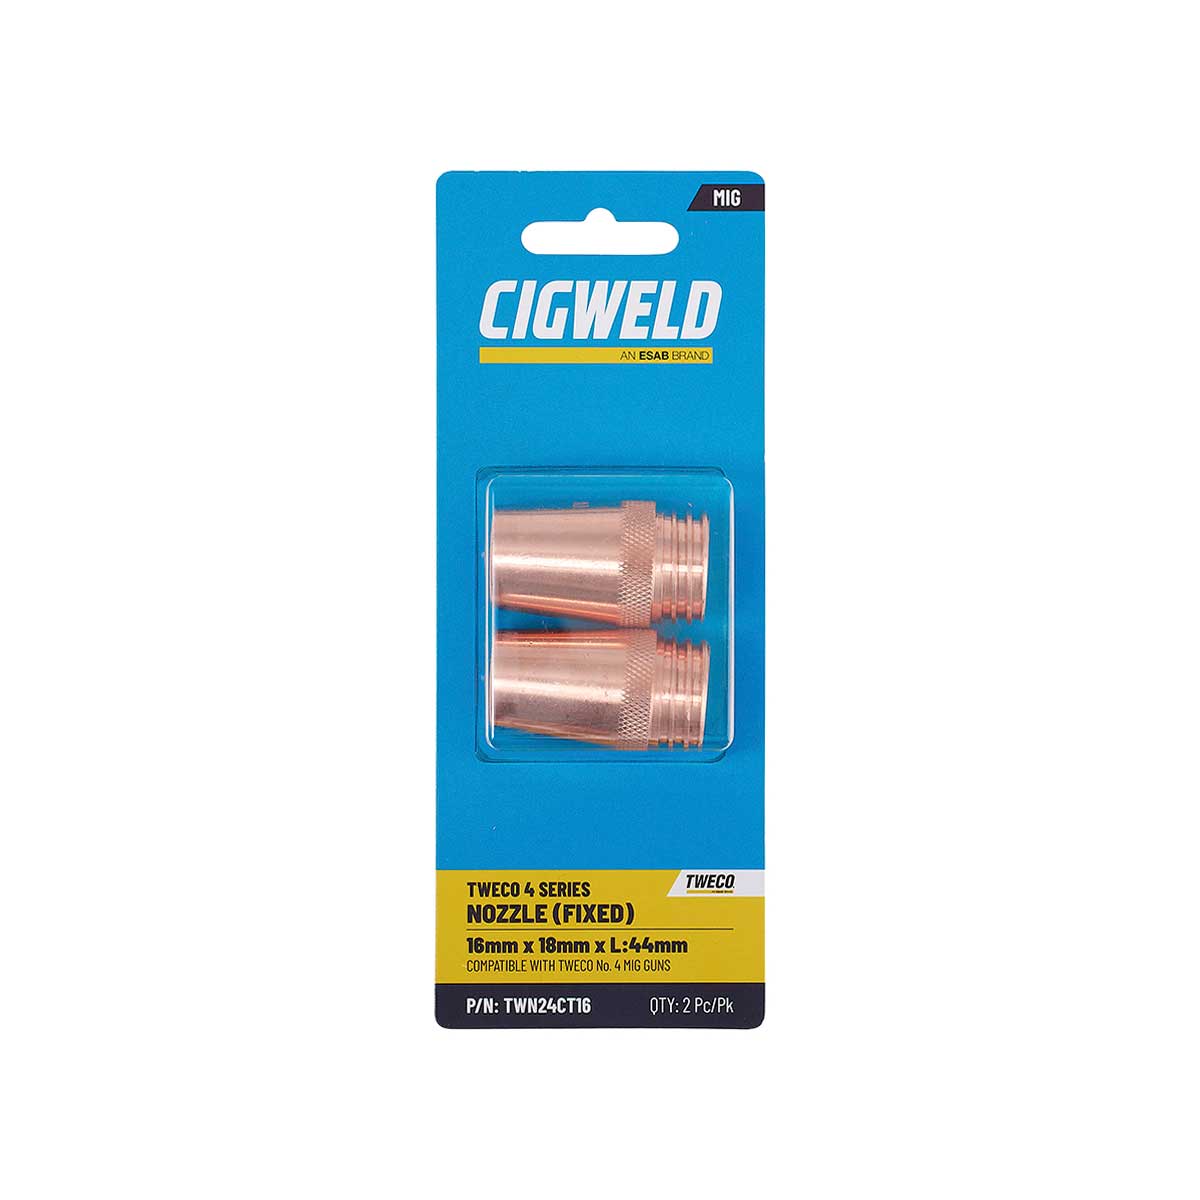 Cigweld Tweco 4 Nozzle Coarse Thread 16mm